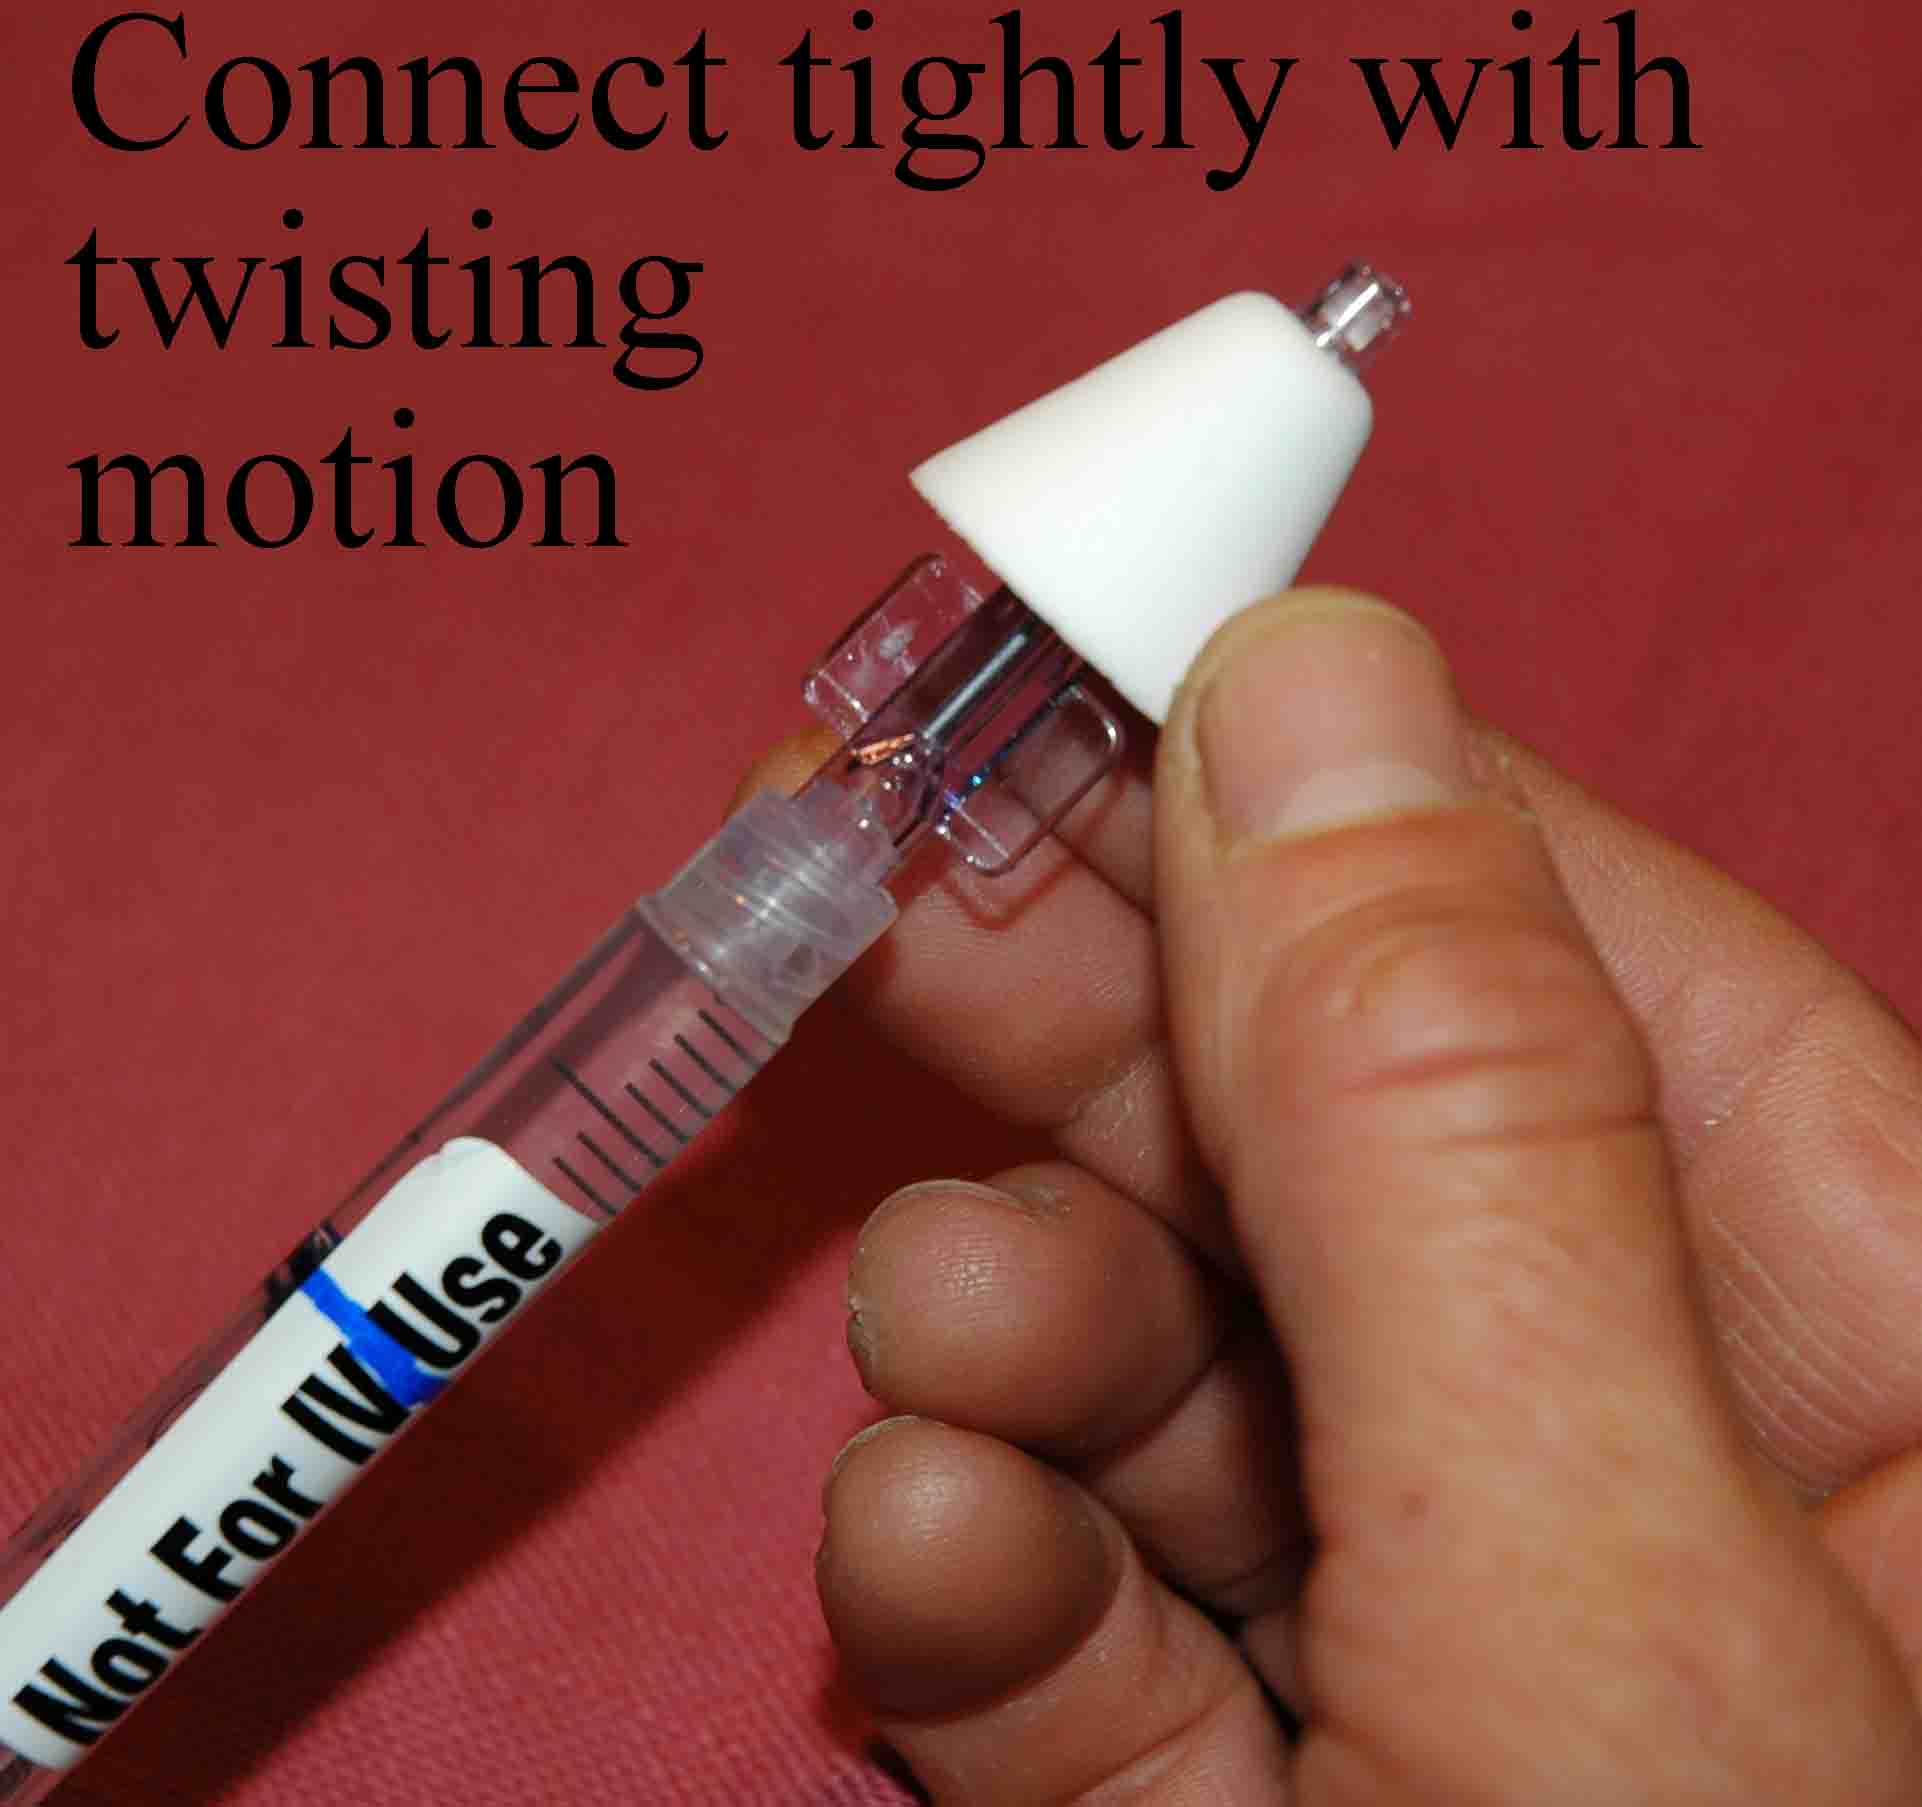 Twist or slip atomizer tip onto syringe snugly